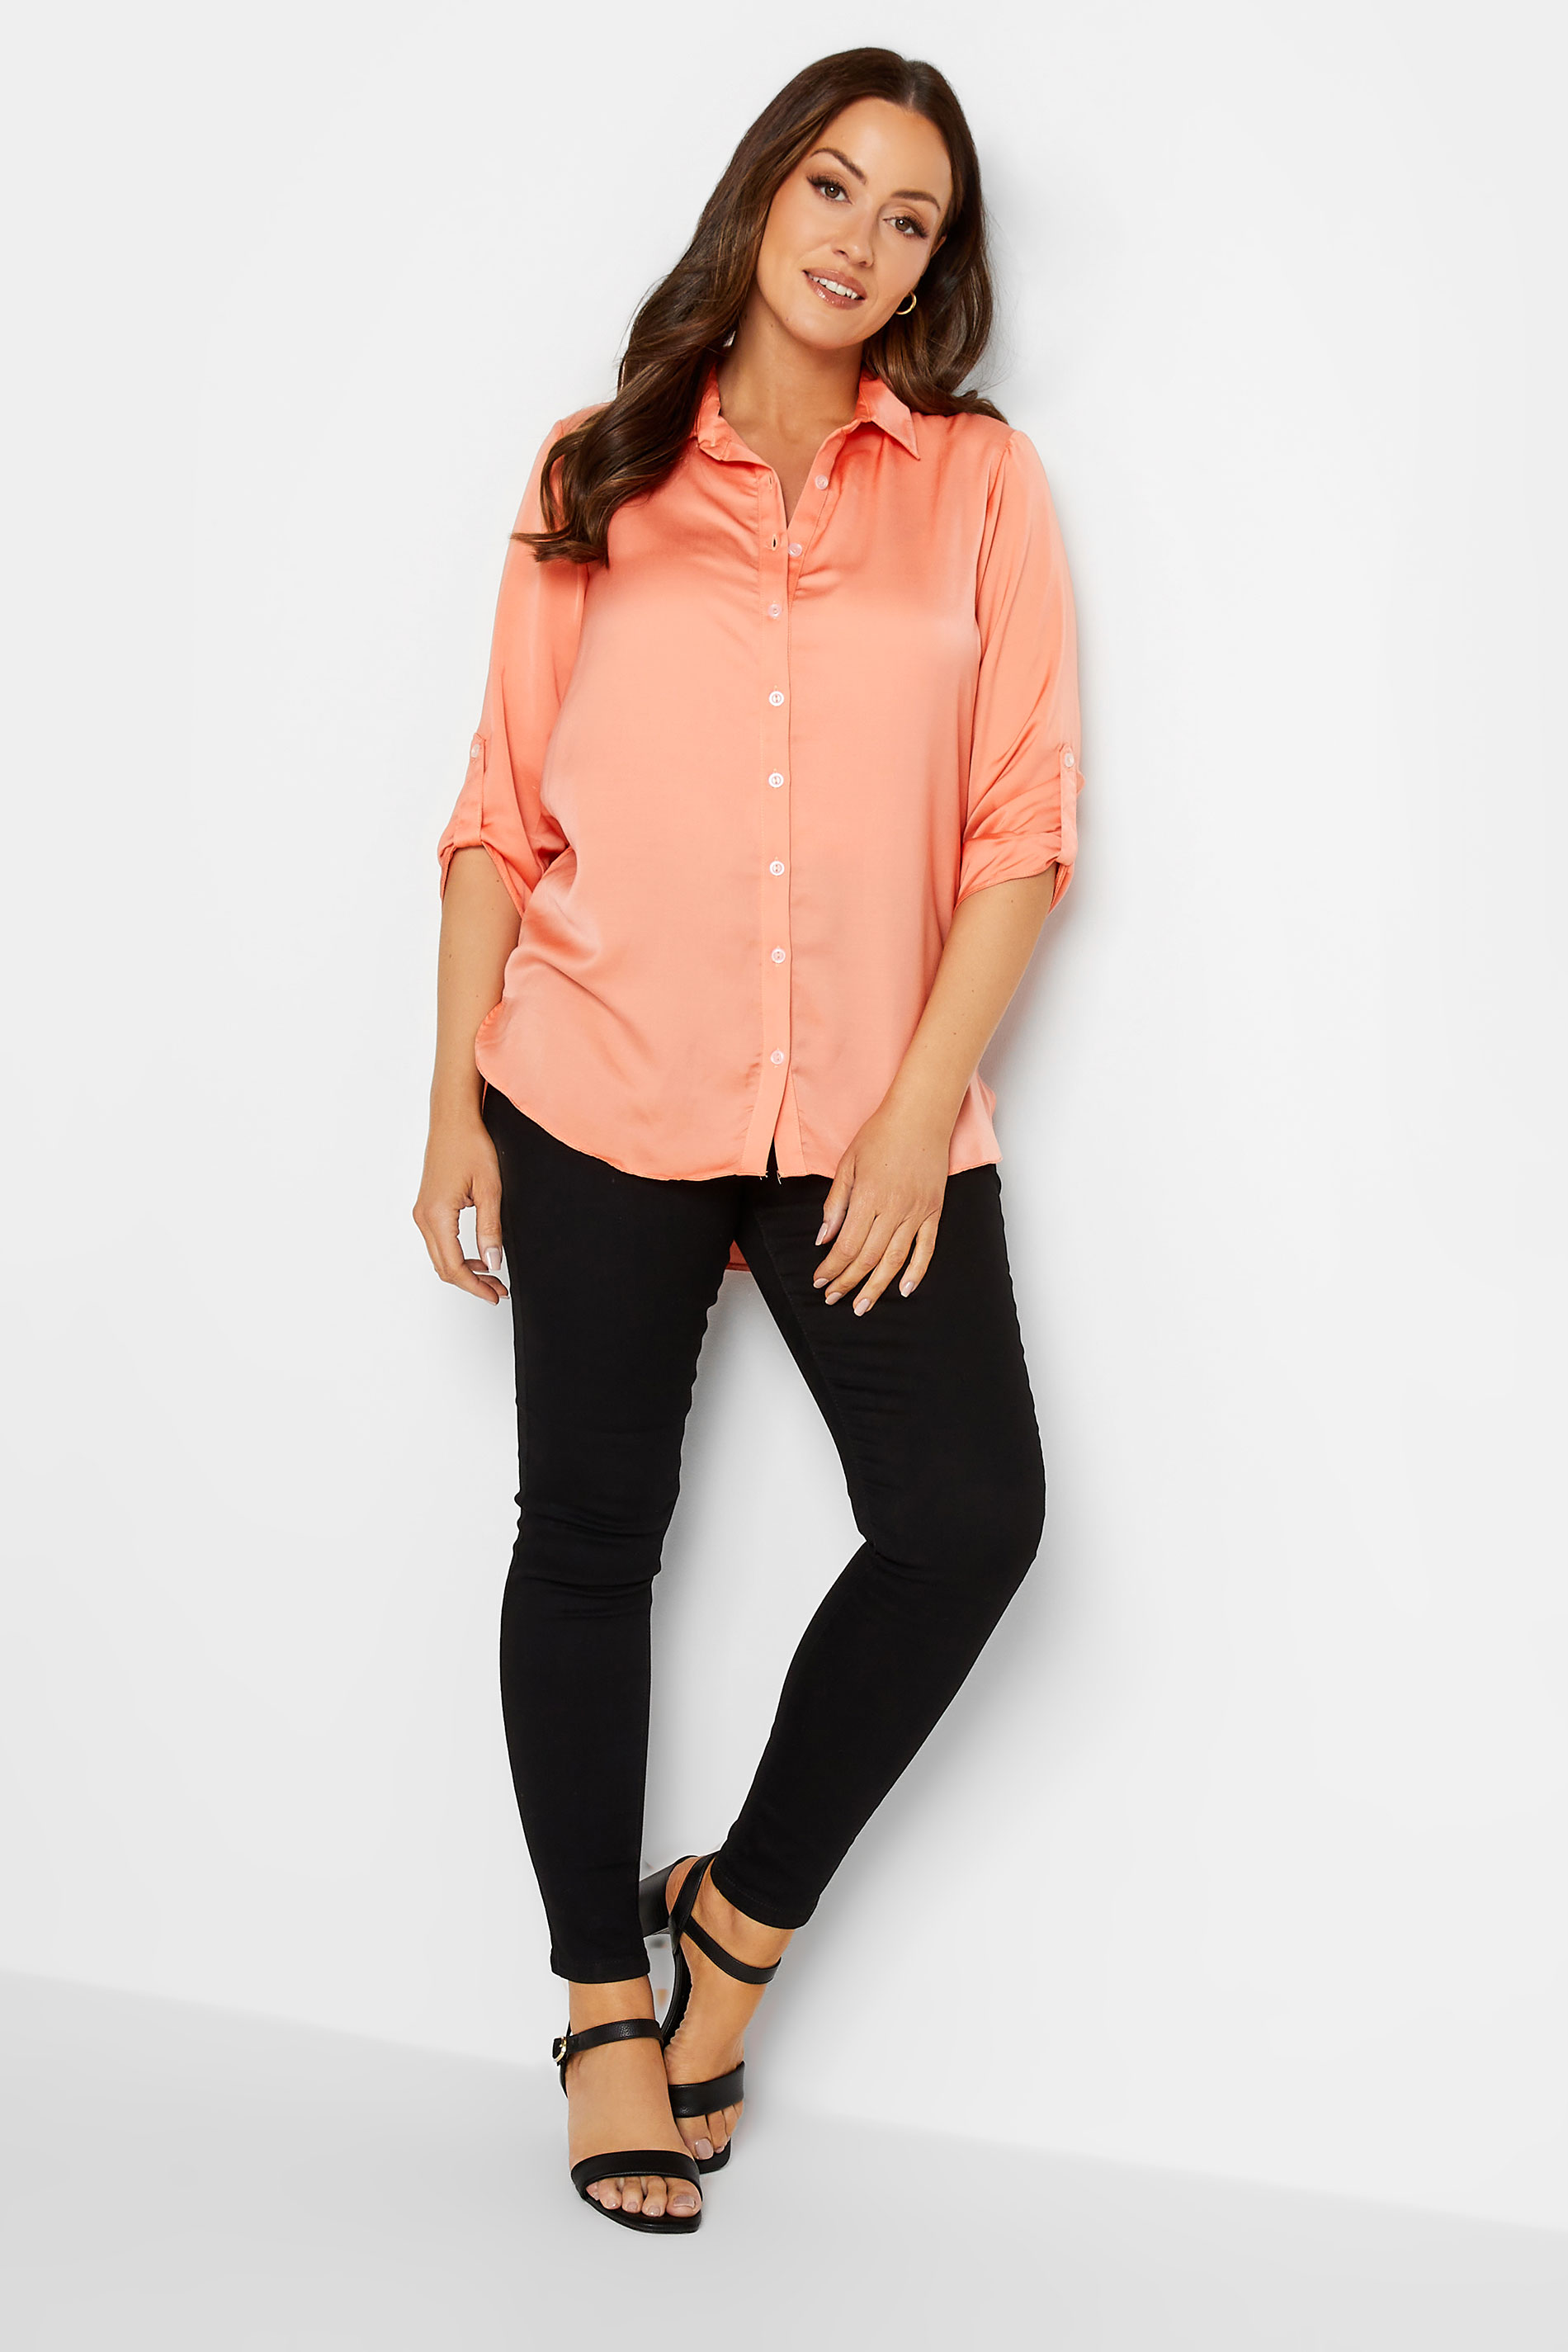 M&Co Orange Tab Sleeve Shirt | M&Co 2